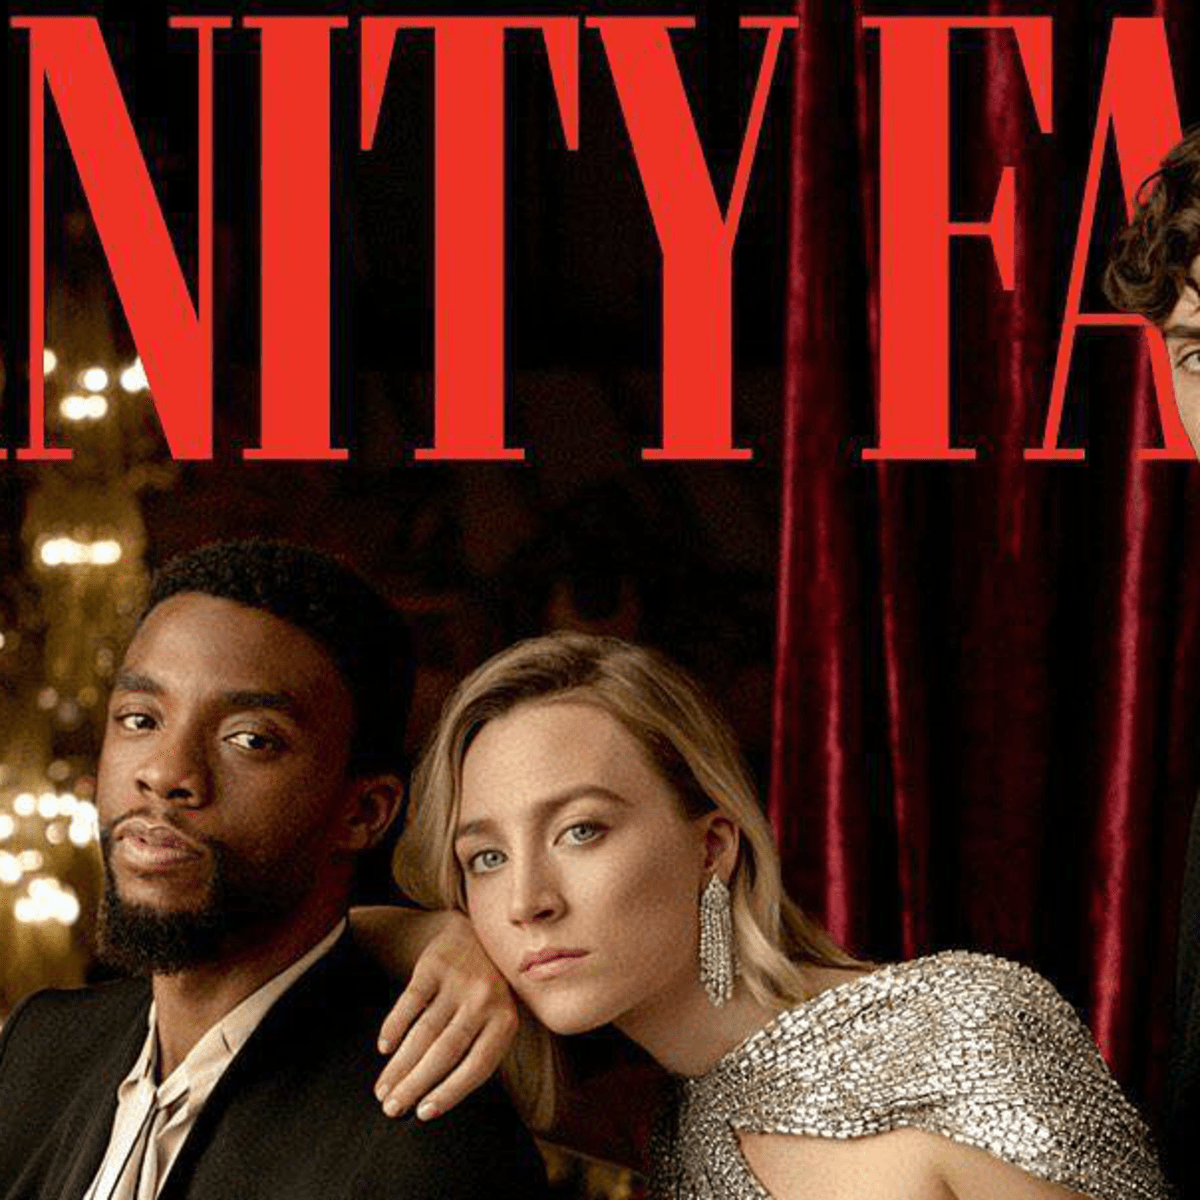 Vanity Fair Magazine (Hollywood, 2019) Chadwick Boseman, Saoirse